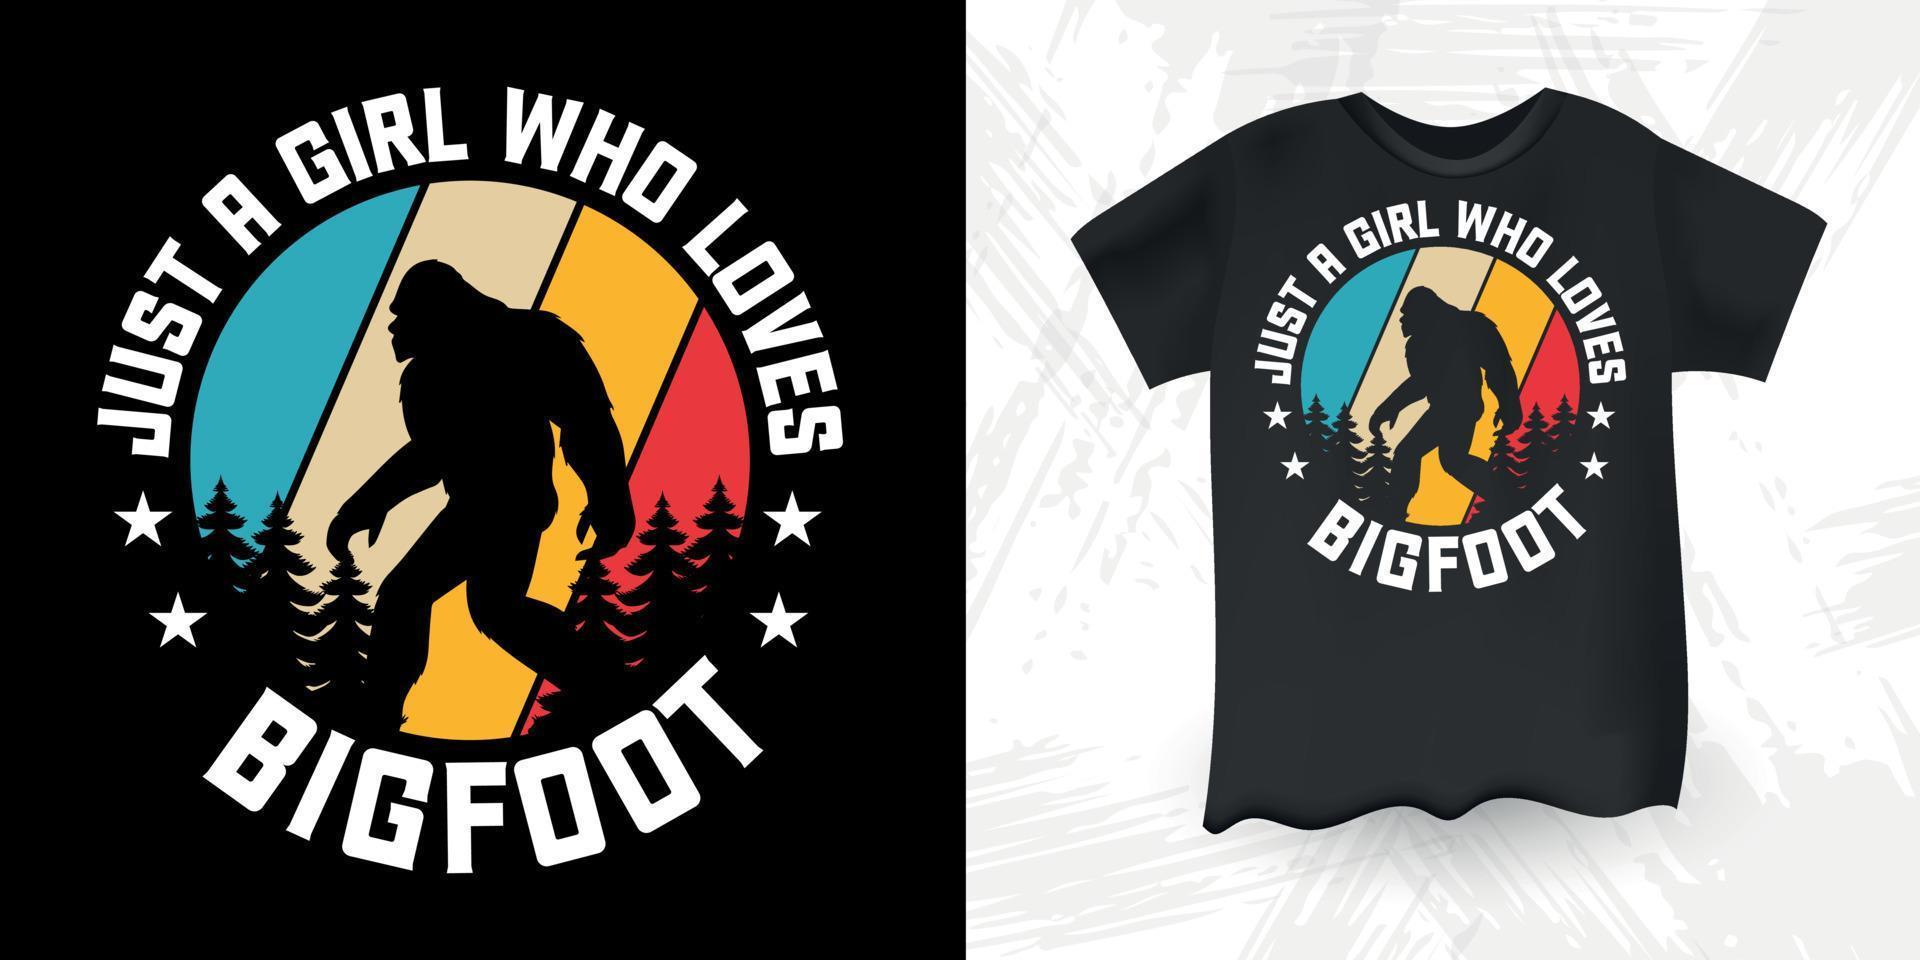 Just A Girl Who Loves Bigfoot Funny Sasquatch Retro Vintage Bigfoot T-Shirt Design vector